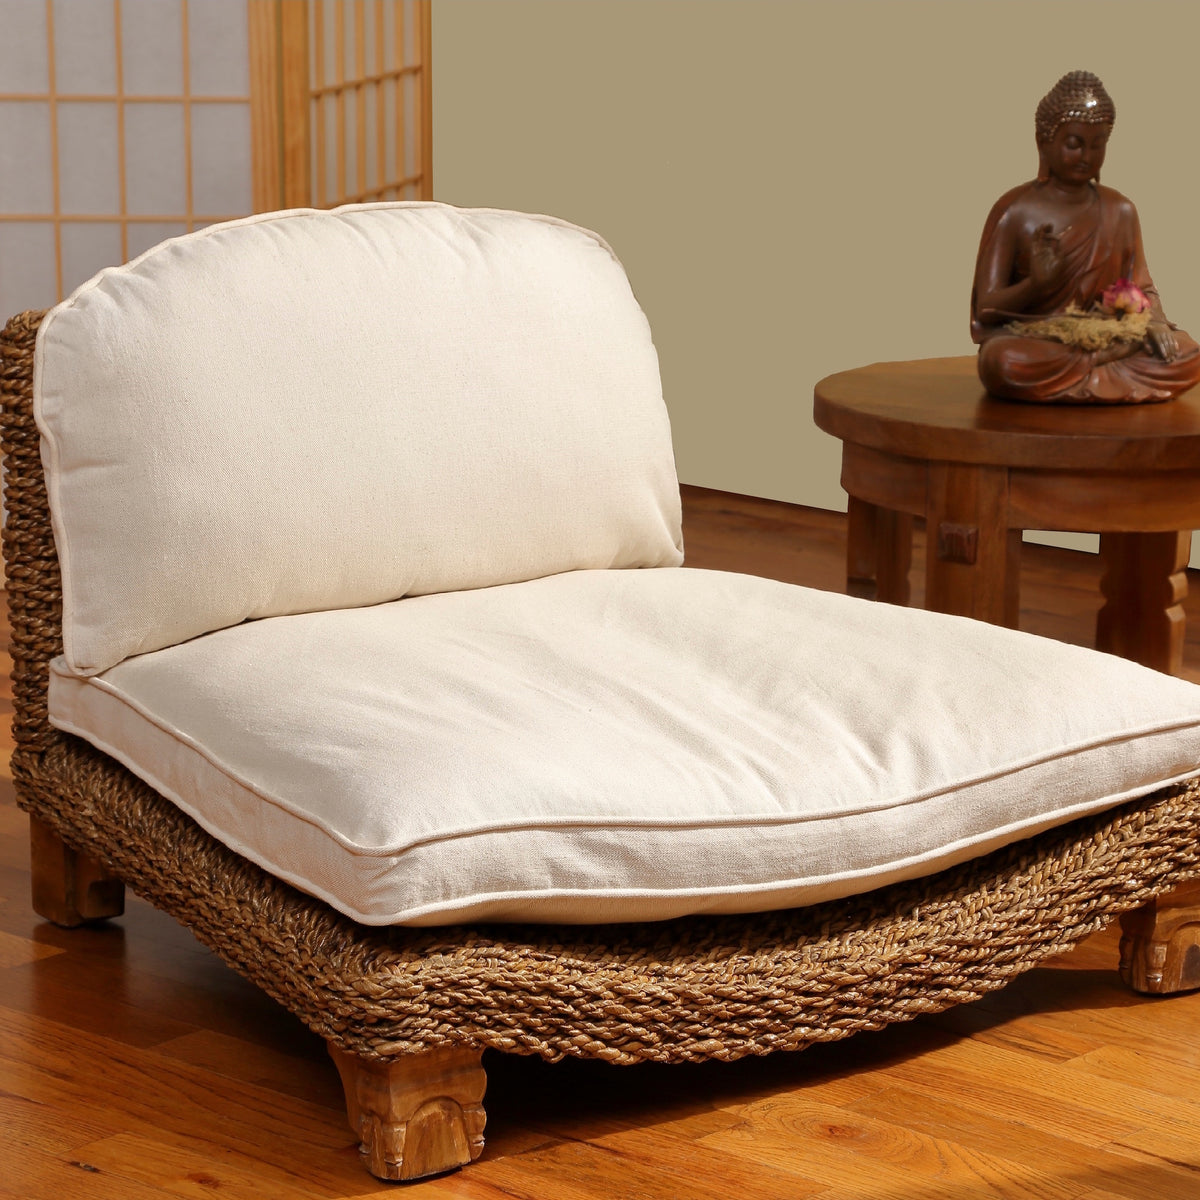 Harmony in Design Serenity Meditation Chair Cream in room